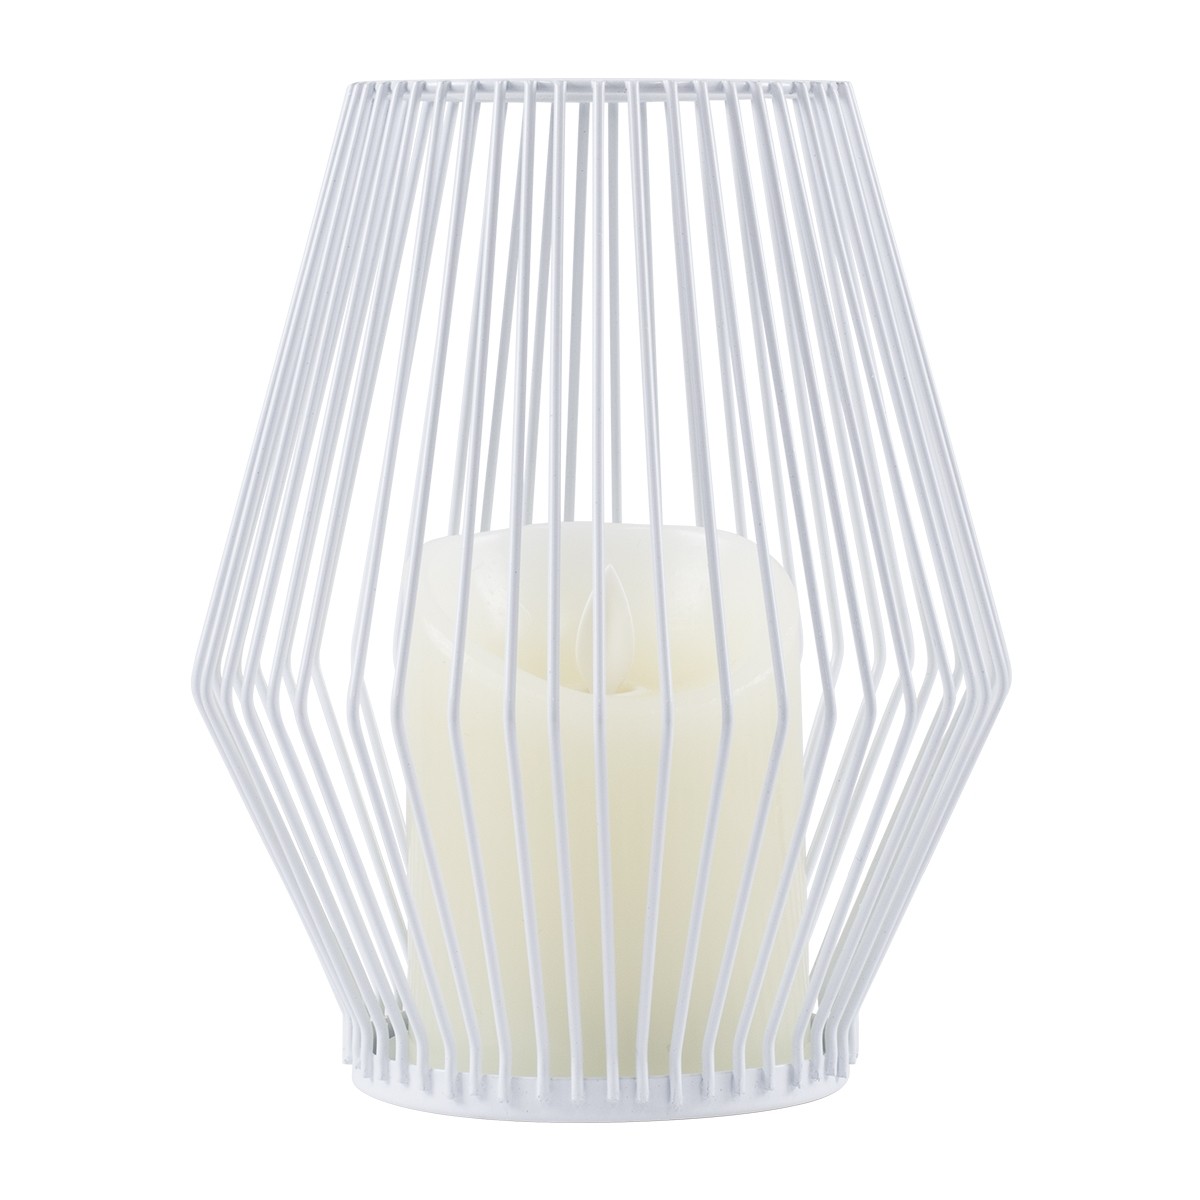 LED CANDLE Διακοσμητικό Realistic Κερί με LED Εφέ Κινούμενης Φλόγας & Ασύρματο Χειριστήριο IR Dimmable Λευκό Φ16 x Υ18cm